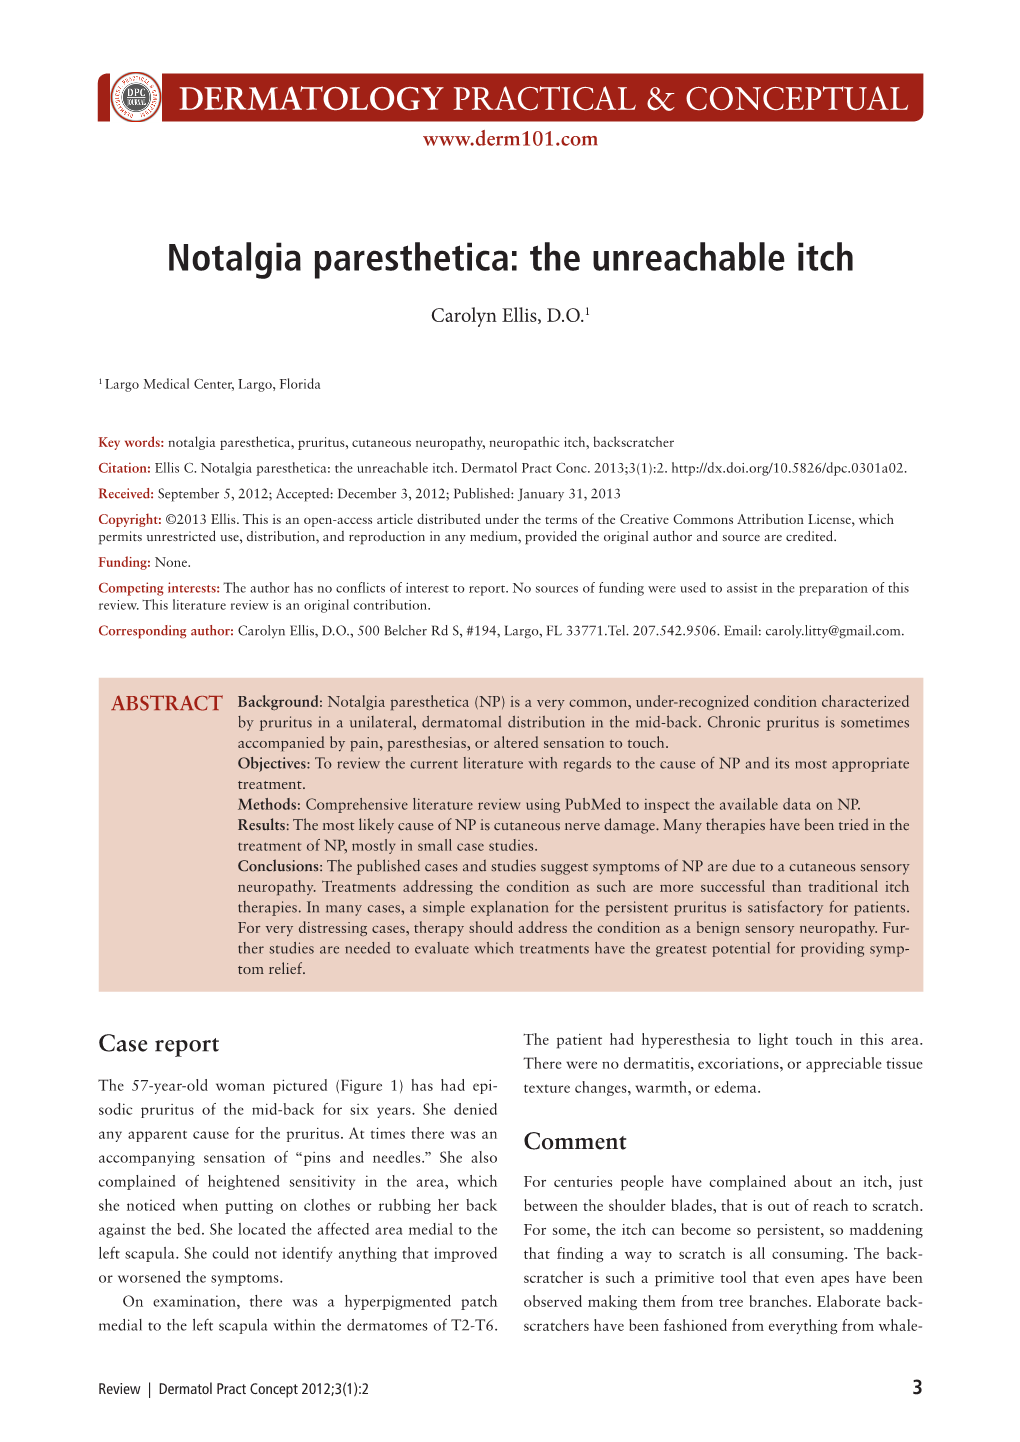 Notalgia Paresthetica: the Unreachable Itch